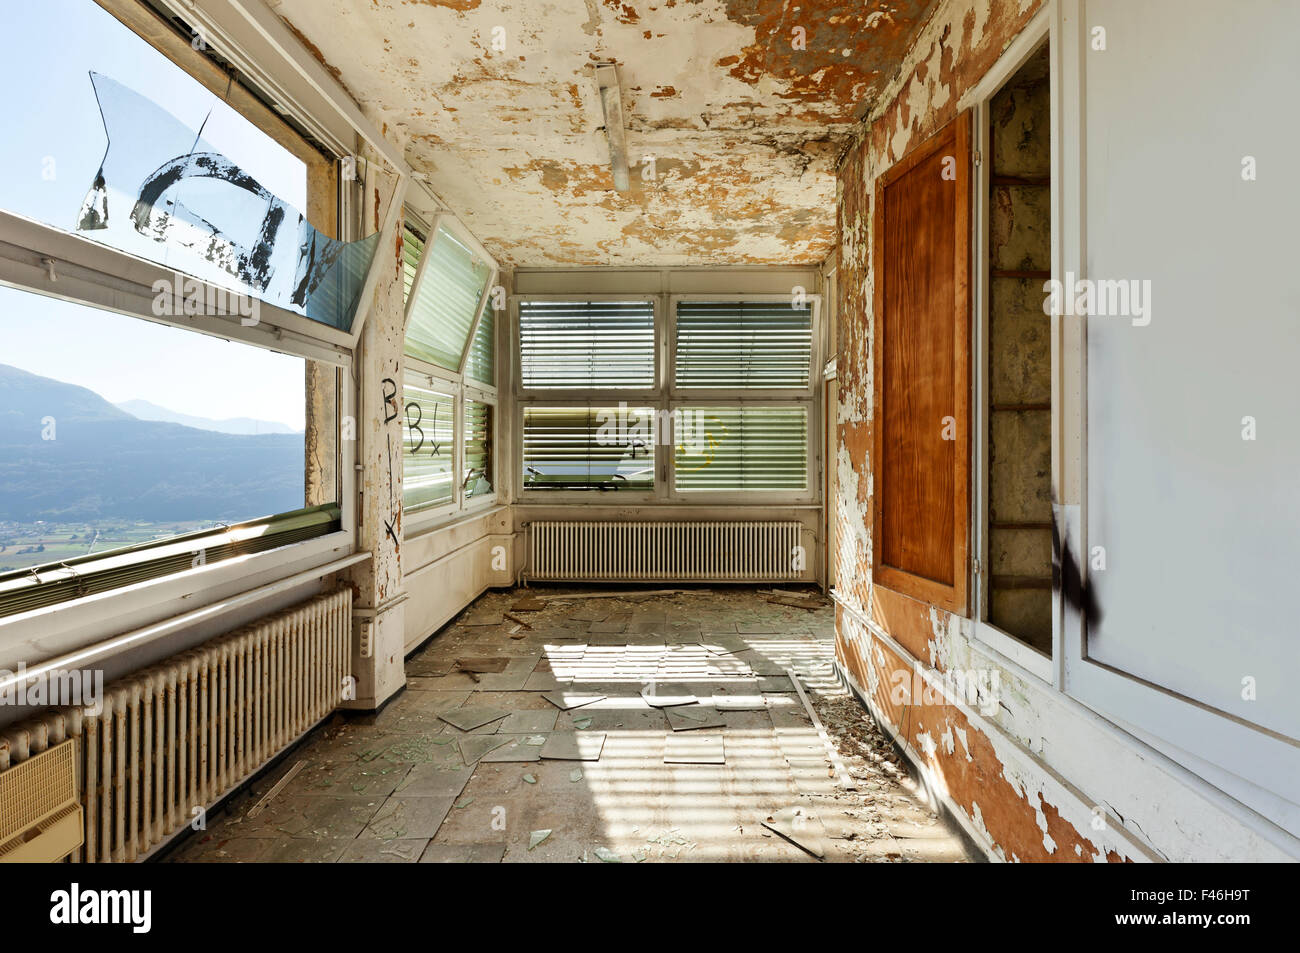 old abandoned house, interior, windows Stock Photo